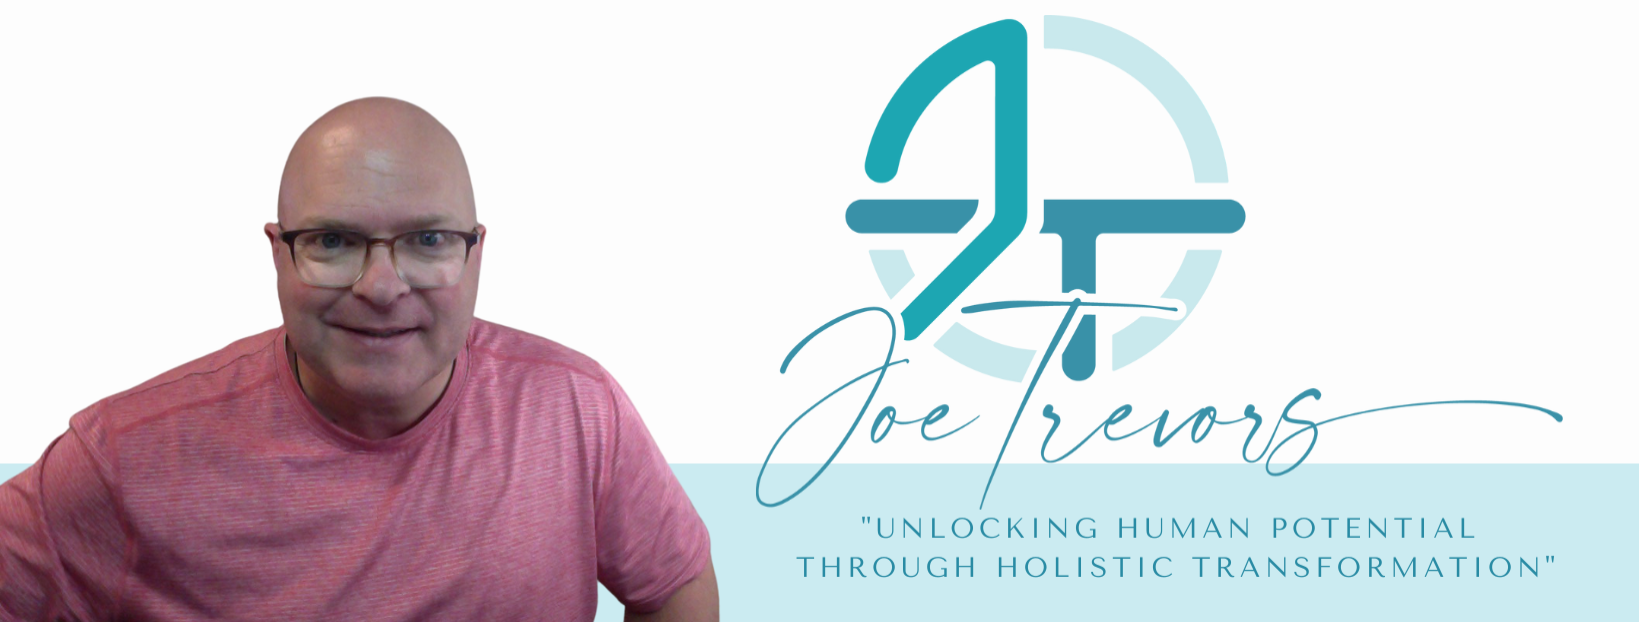 Joe Trevors smiling portrait, signature logo, and "Unlocking Human Potential Through Holistic Transformation" slogan banner.